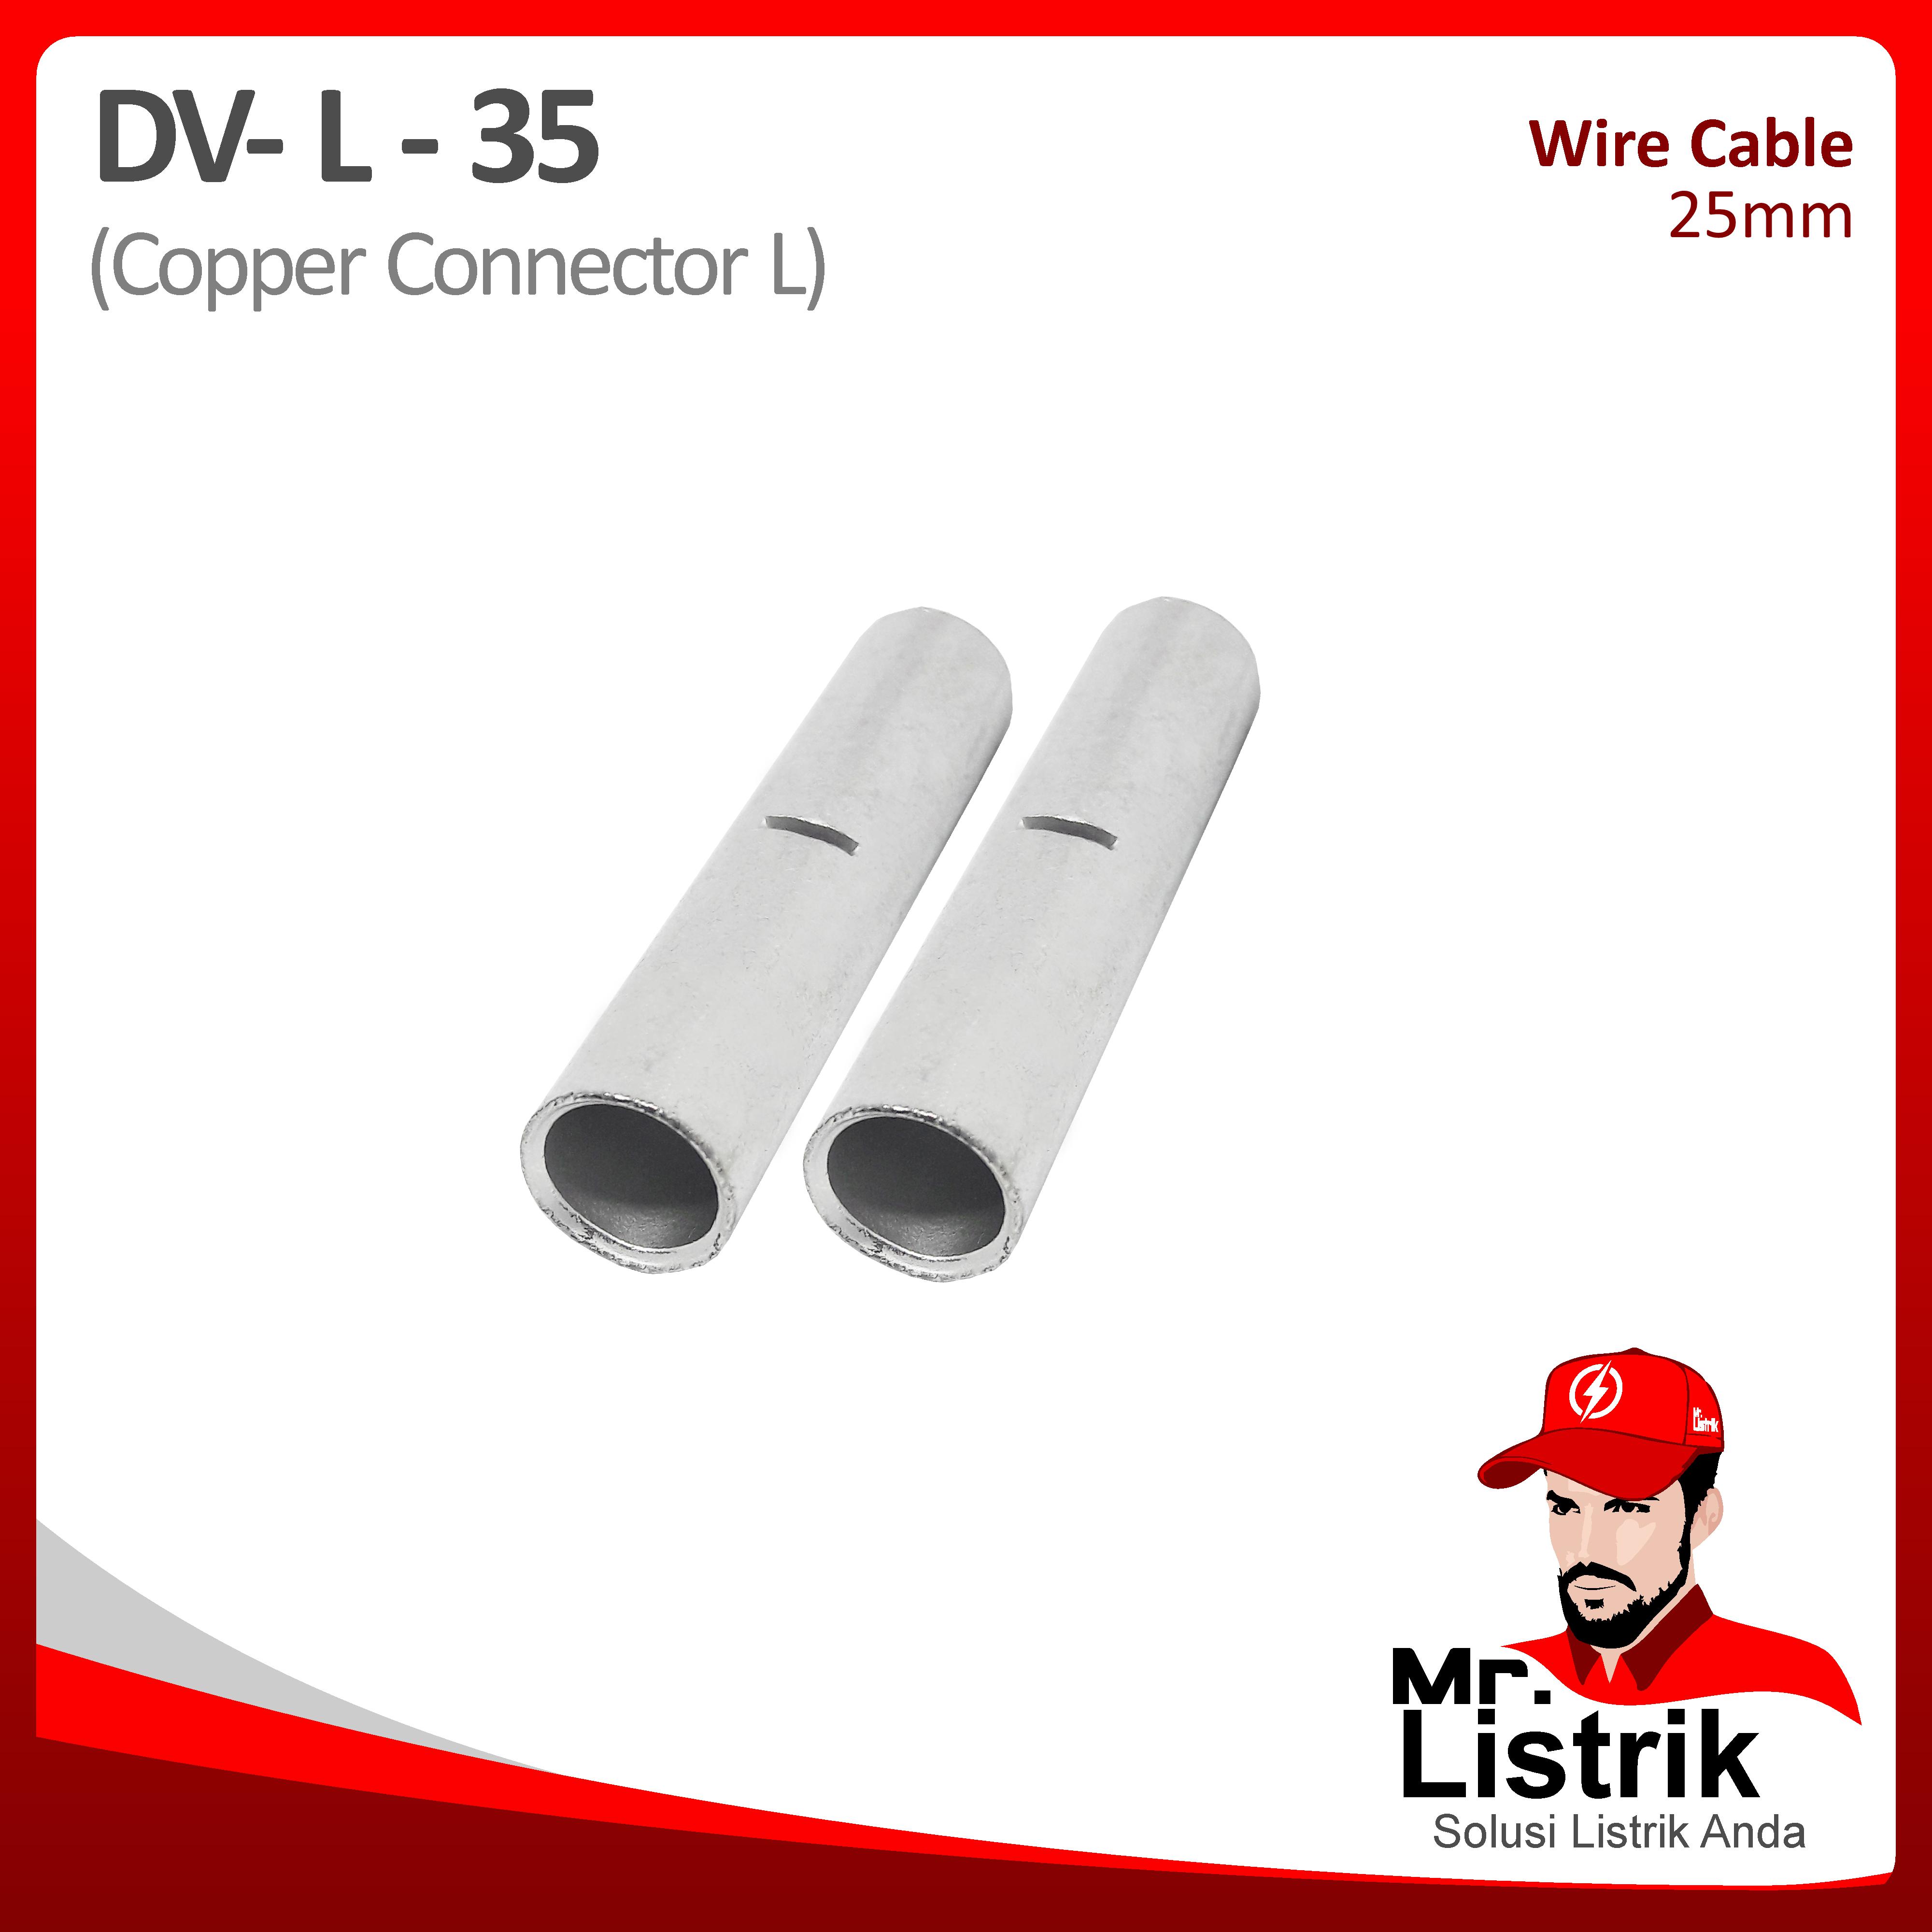 Copper Connector-L 35mm DV L-35